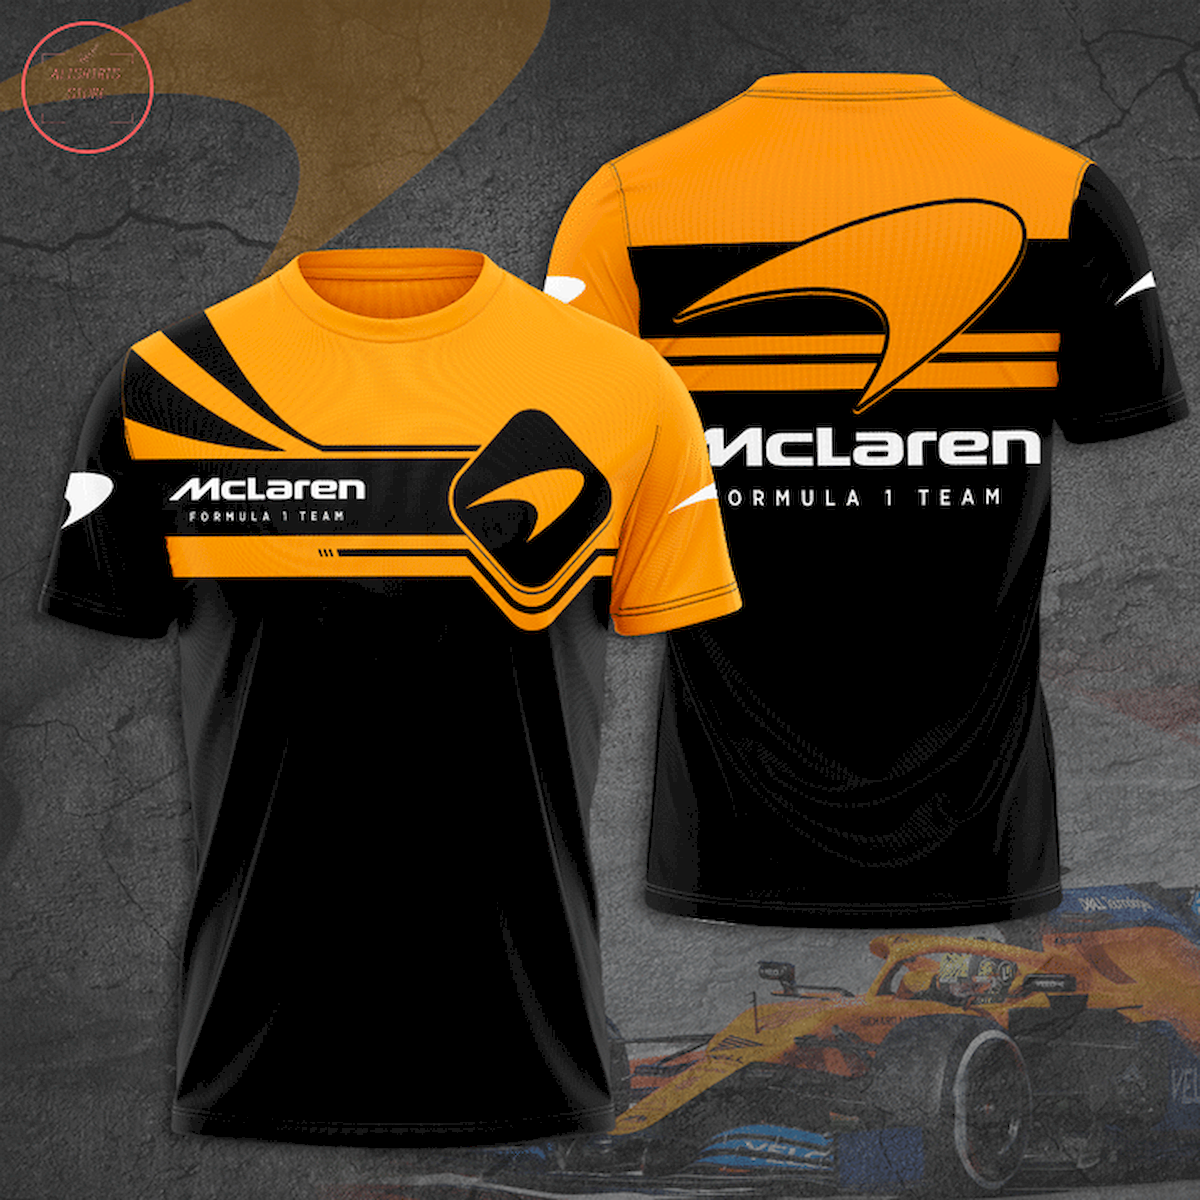 McLaren Formula 1 Team All Over Printed Shirts